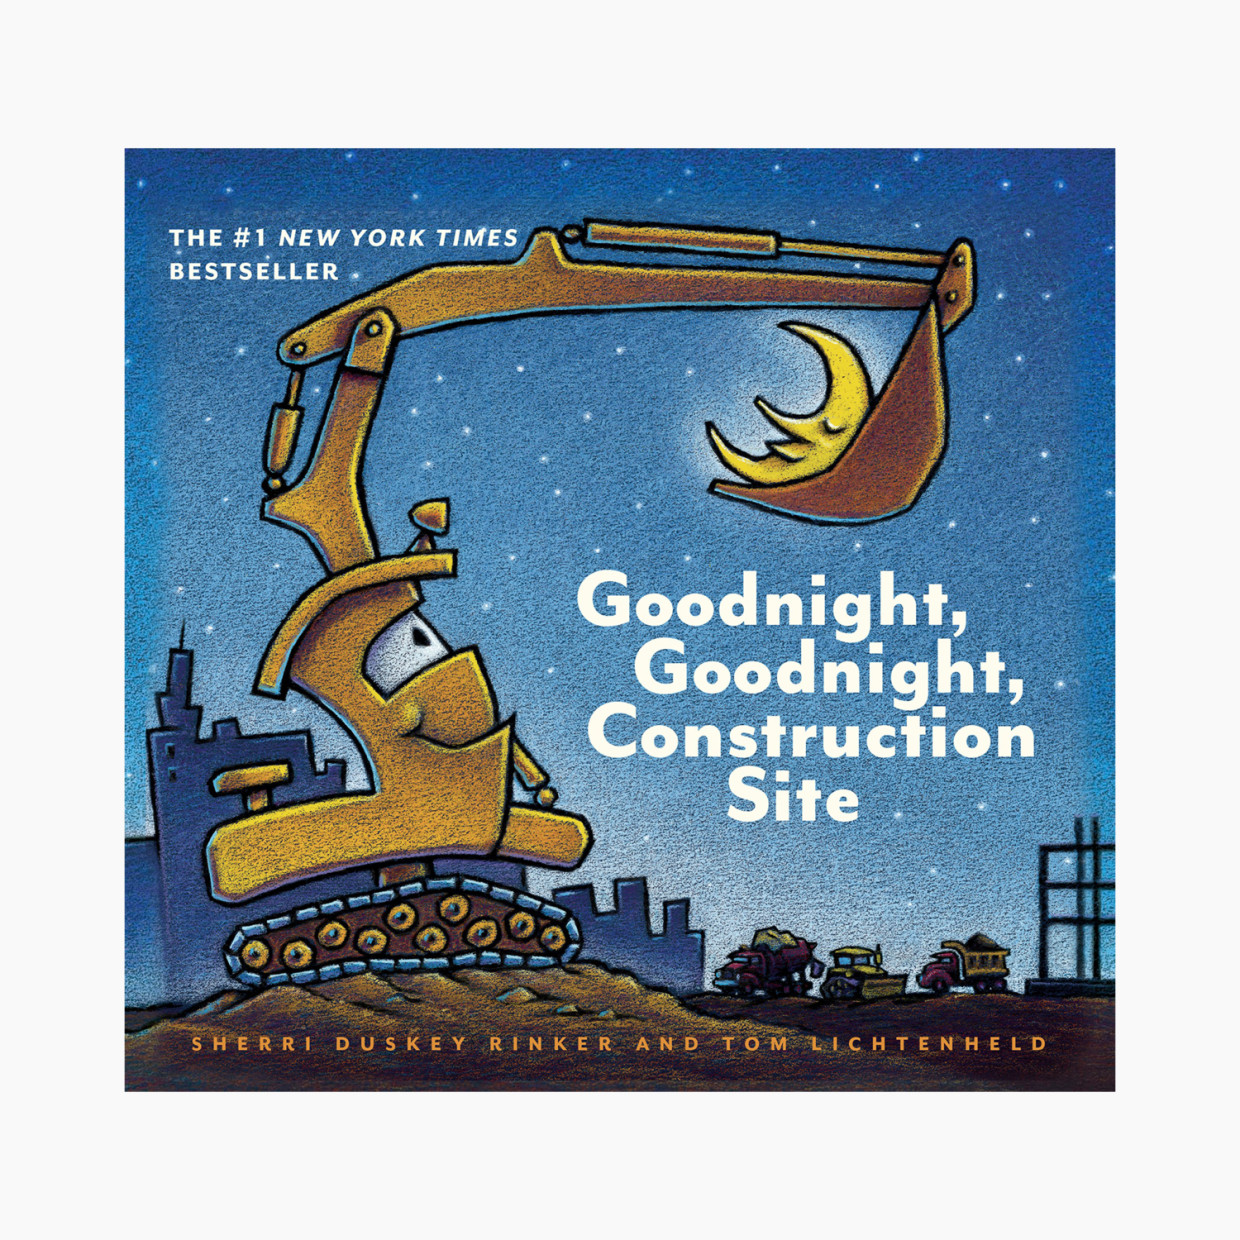 Goodnight, Goodnight Construction Site.